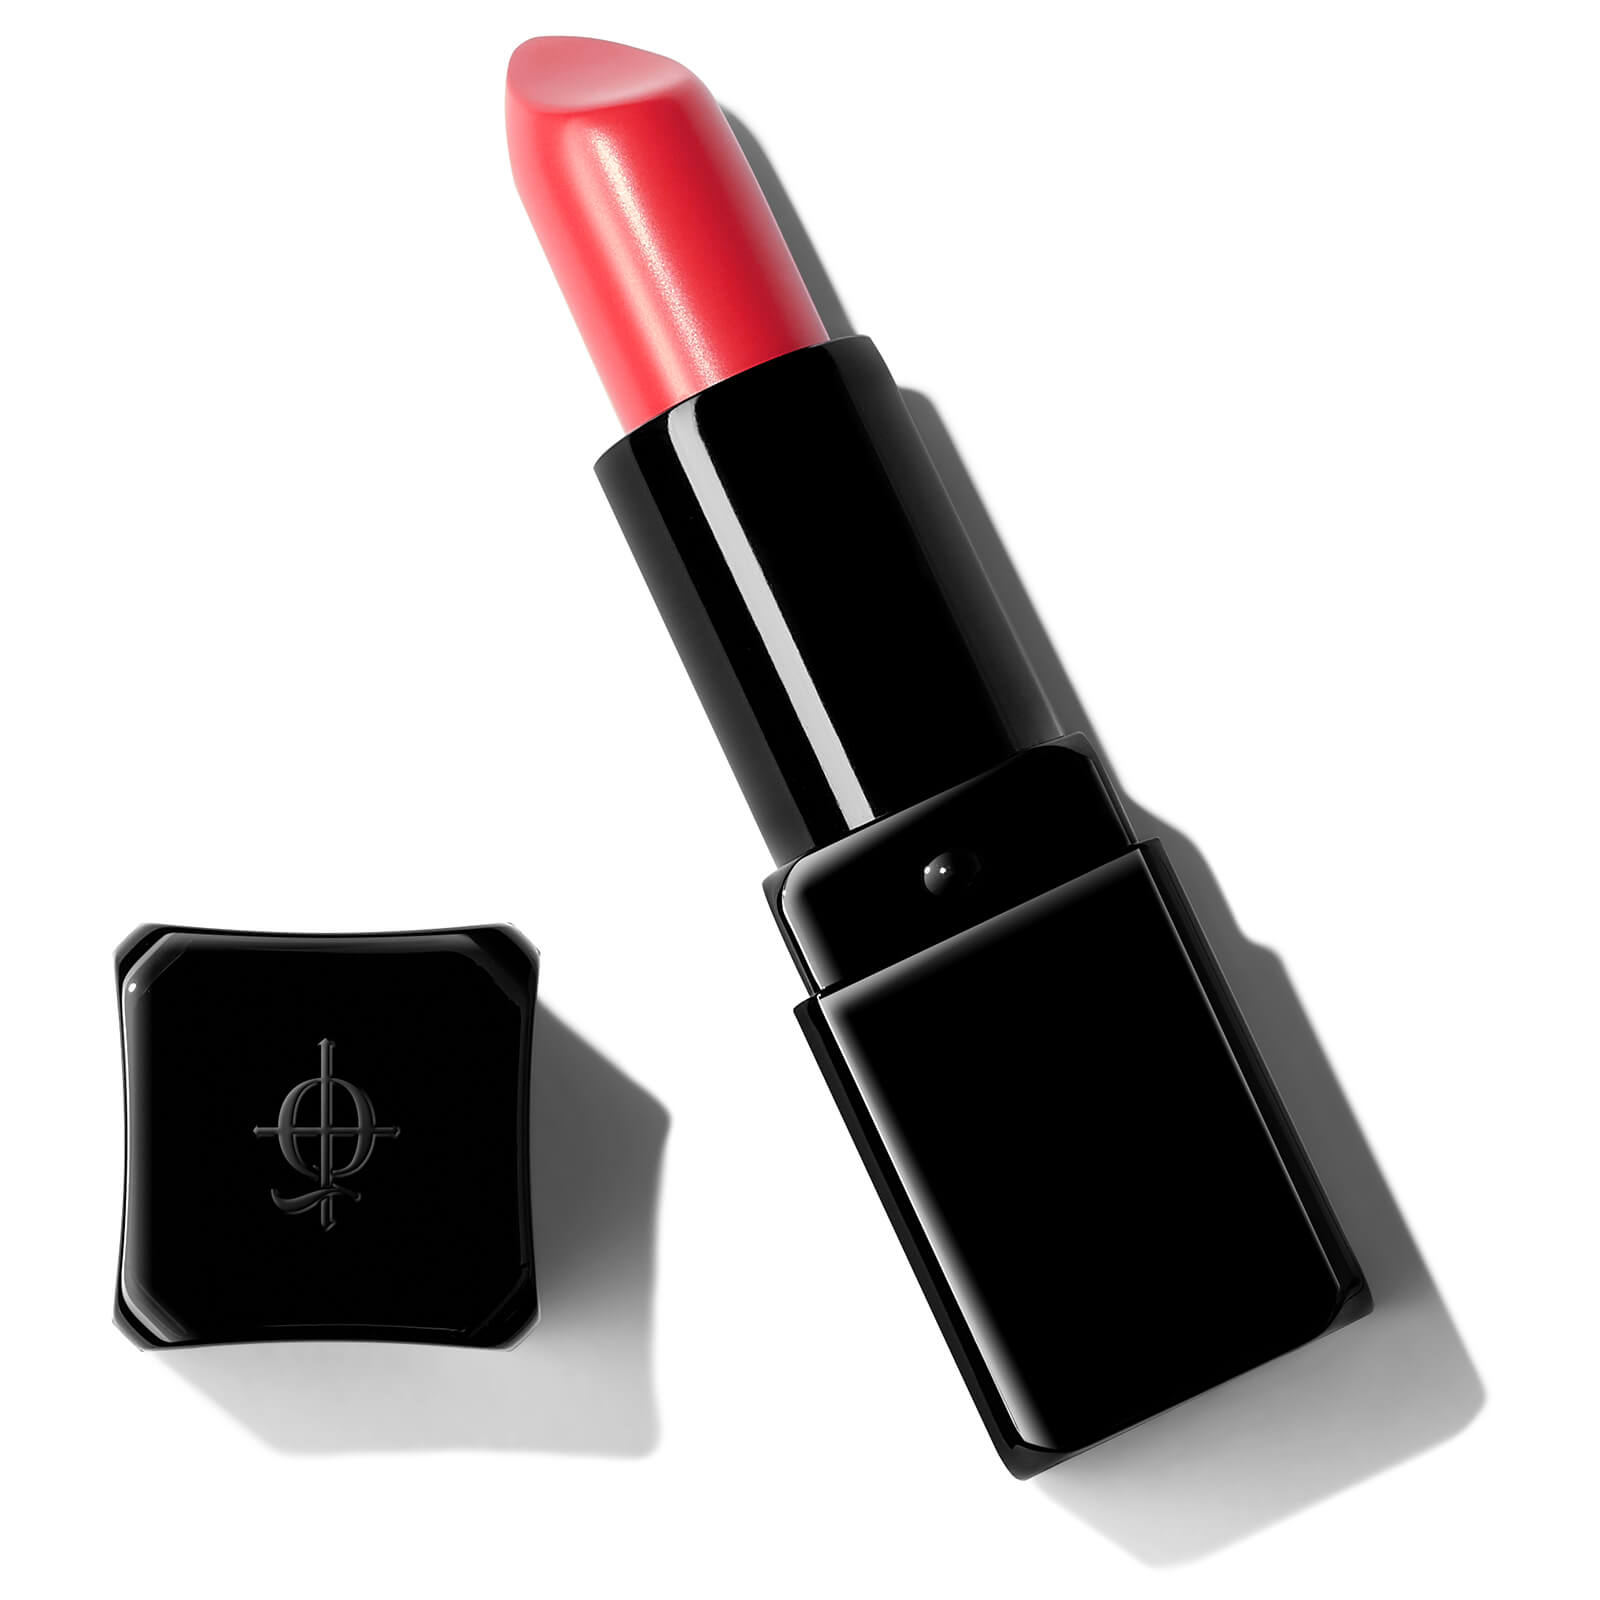 Illamasqua Antimatter Lipstick (ulike nyanser) - Smoulder